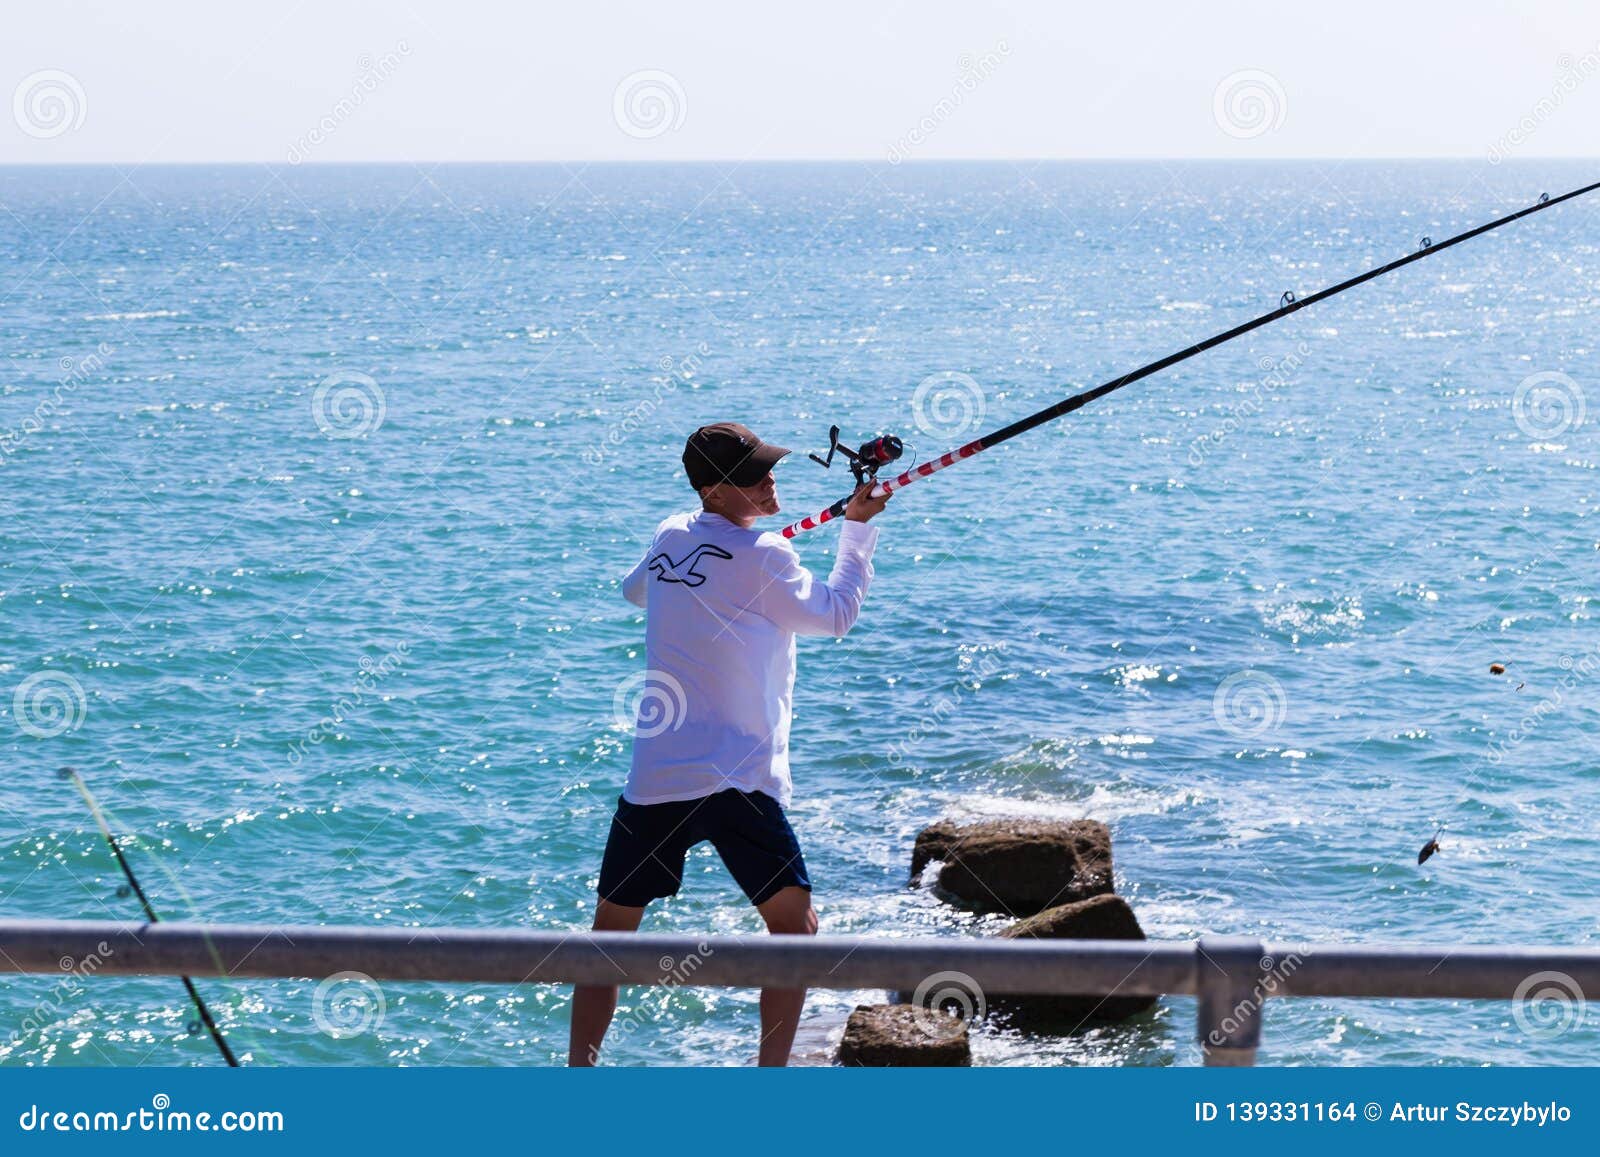 https://thumbs.dreamstime.com/z/brighton-uk-june-man-cap-standing-shore-holding-sideways-long-fishing-rod-reel-crystal-blue-wavy-water-sunny-day-sport-139331164.jpg